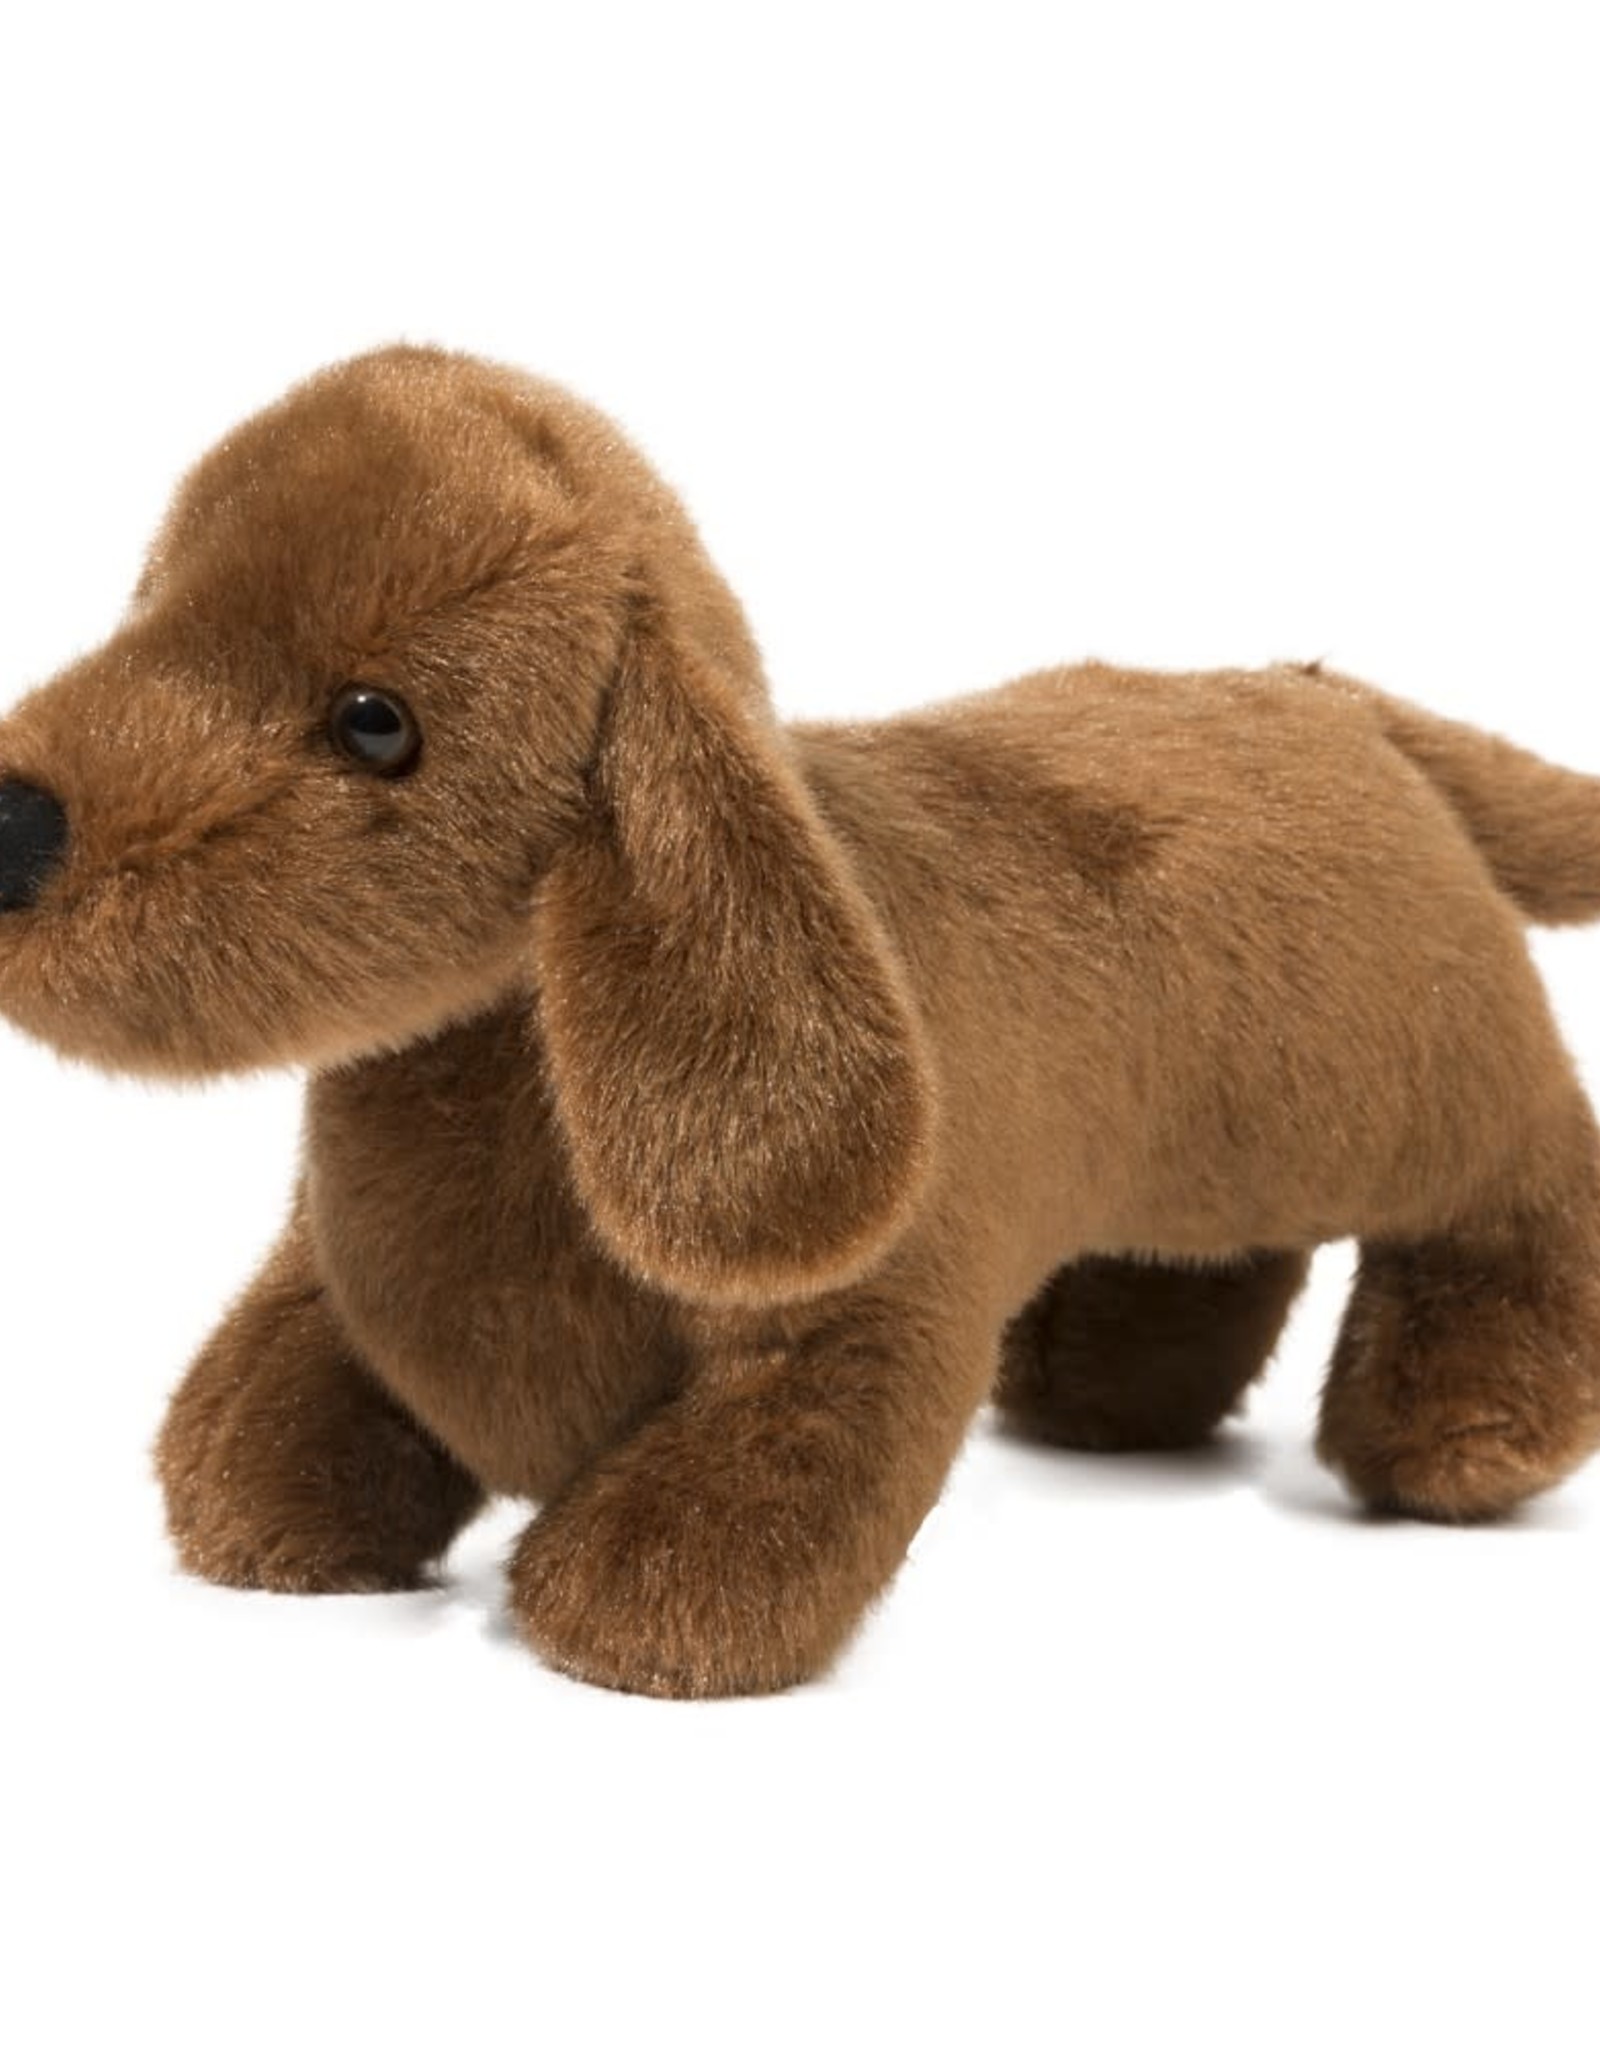 Douglas Dilly Dachschund Stuffed Animal